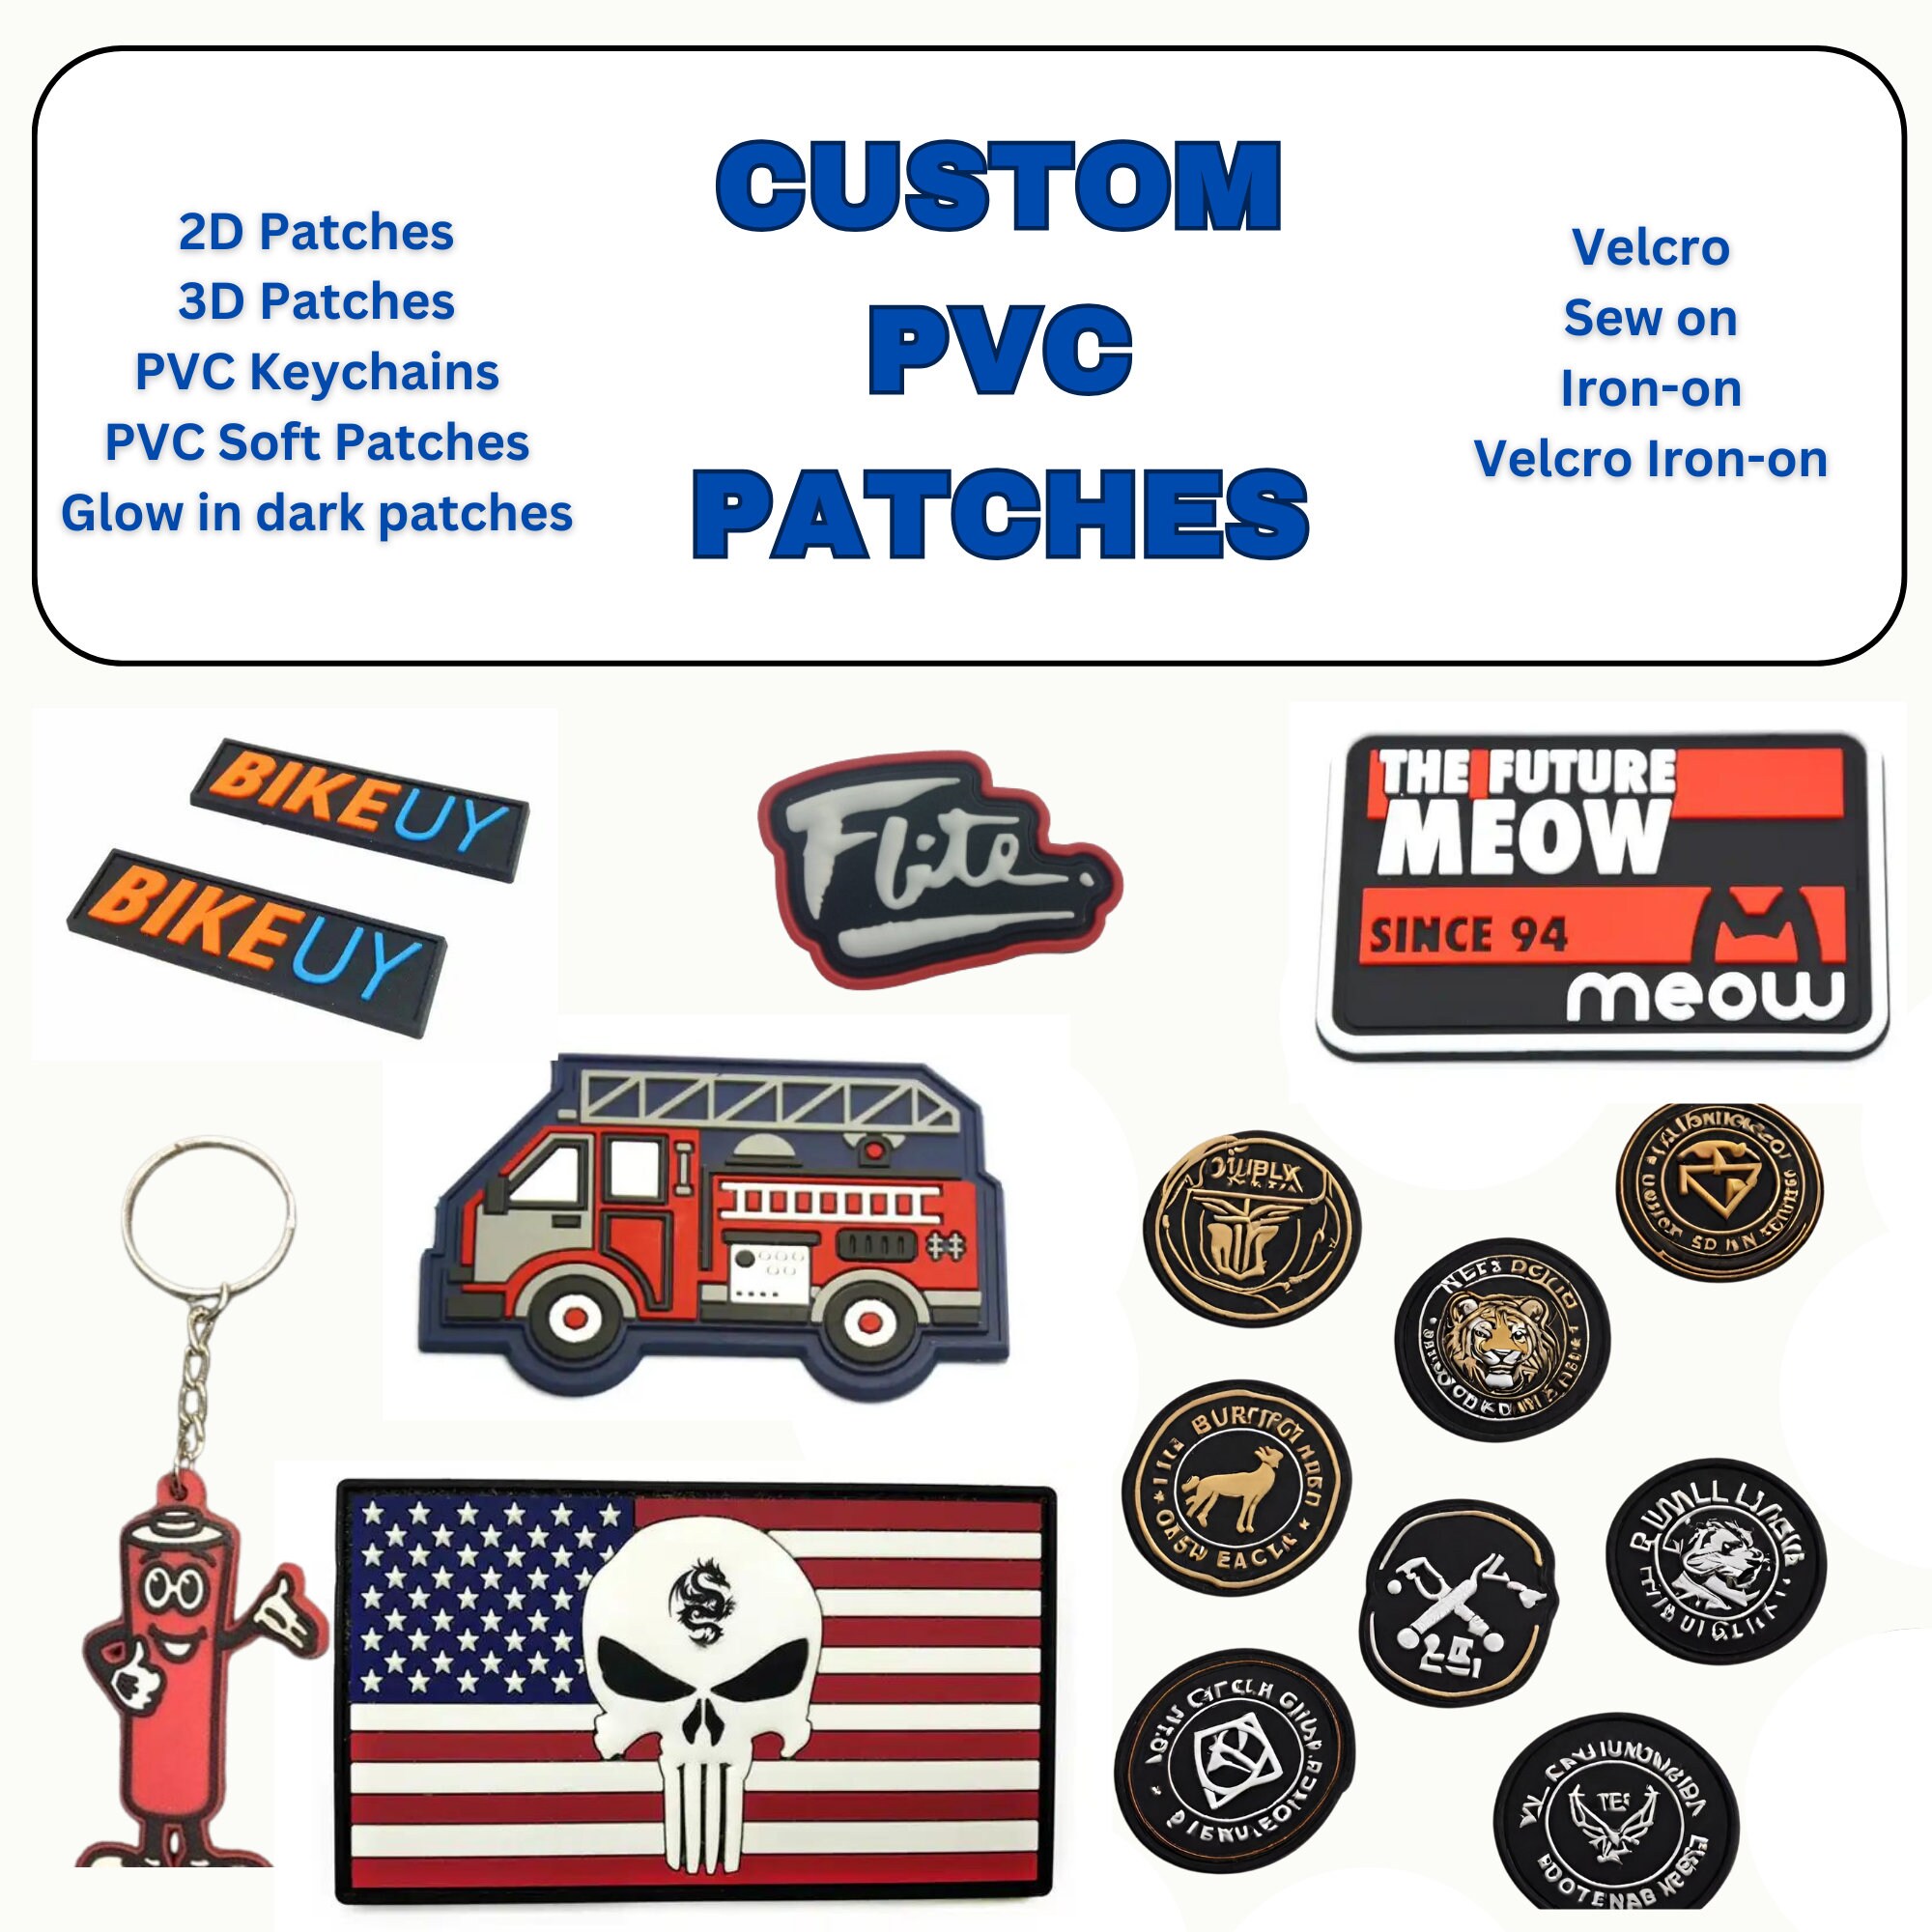 100 Pvc Patch, Pvc Patch Custom, PVC Morale Patch, 3d Pvc Patch